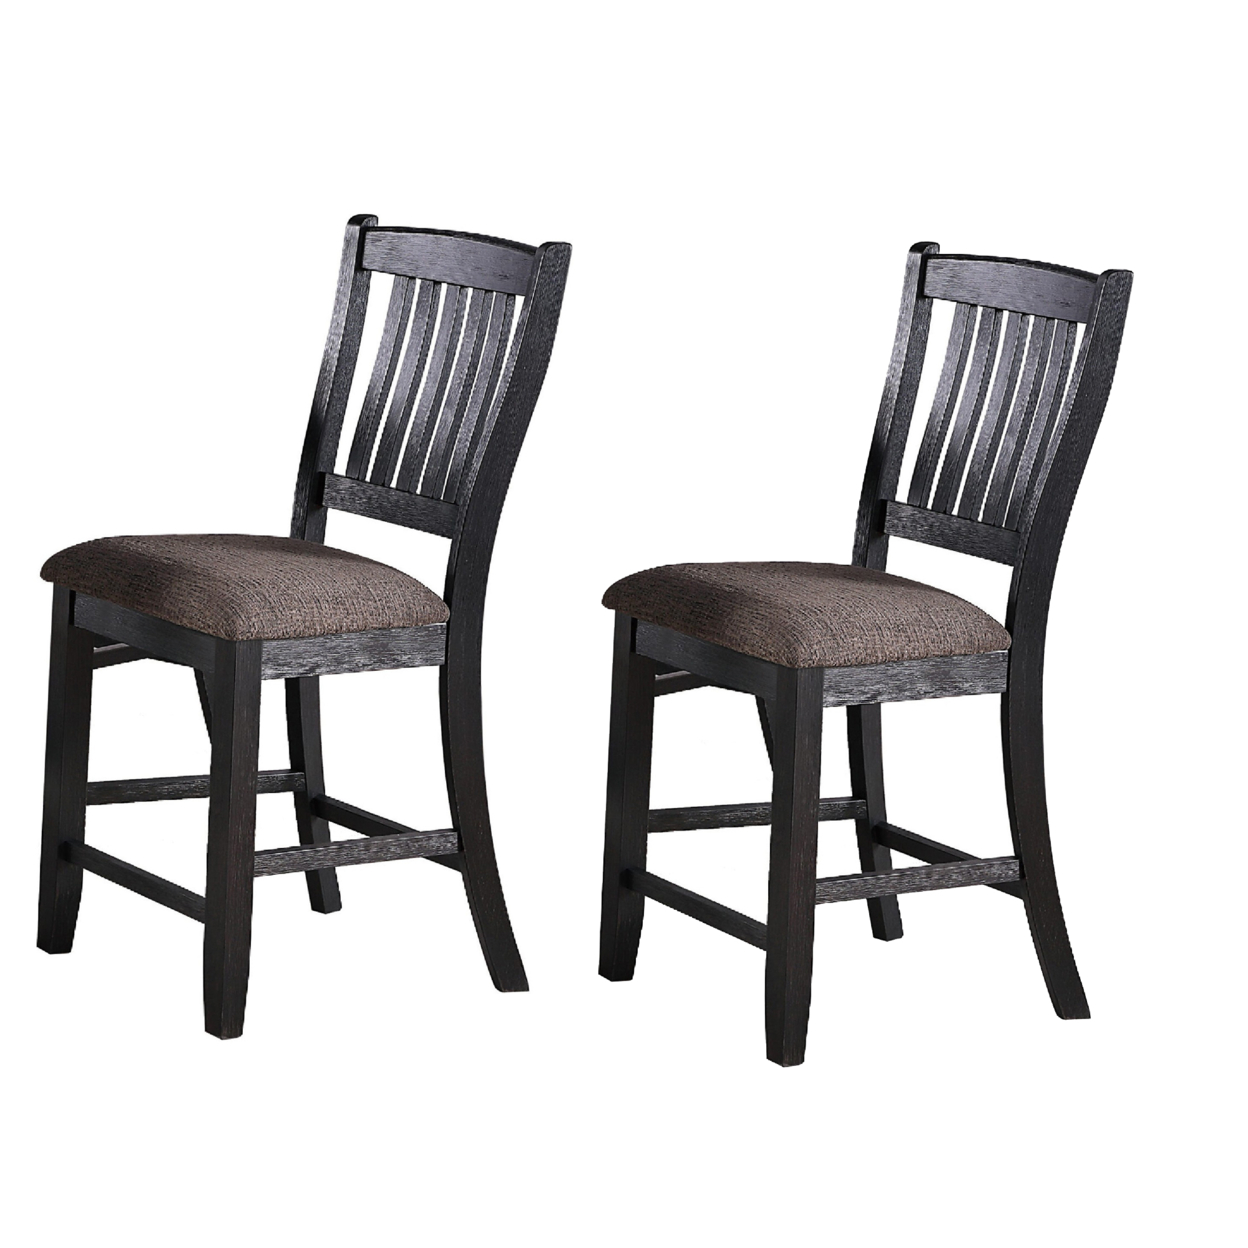 Chair With High Slatted Back Design, Set Of 2, Dark Brown- Saltoro Sherpi